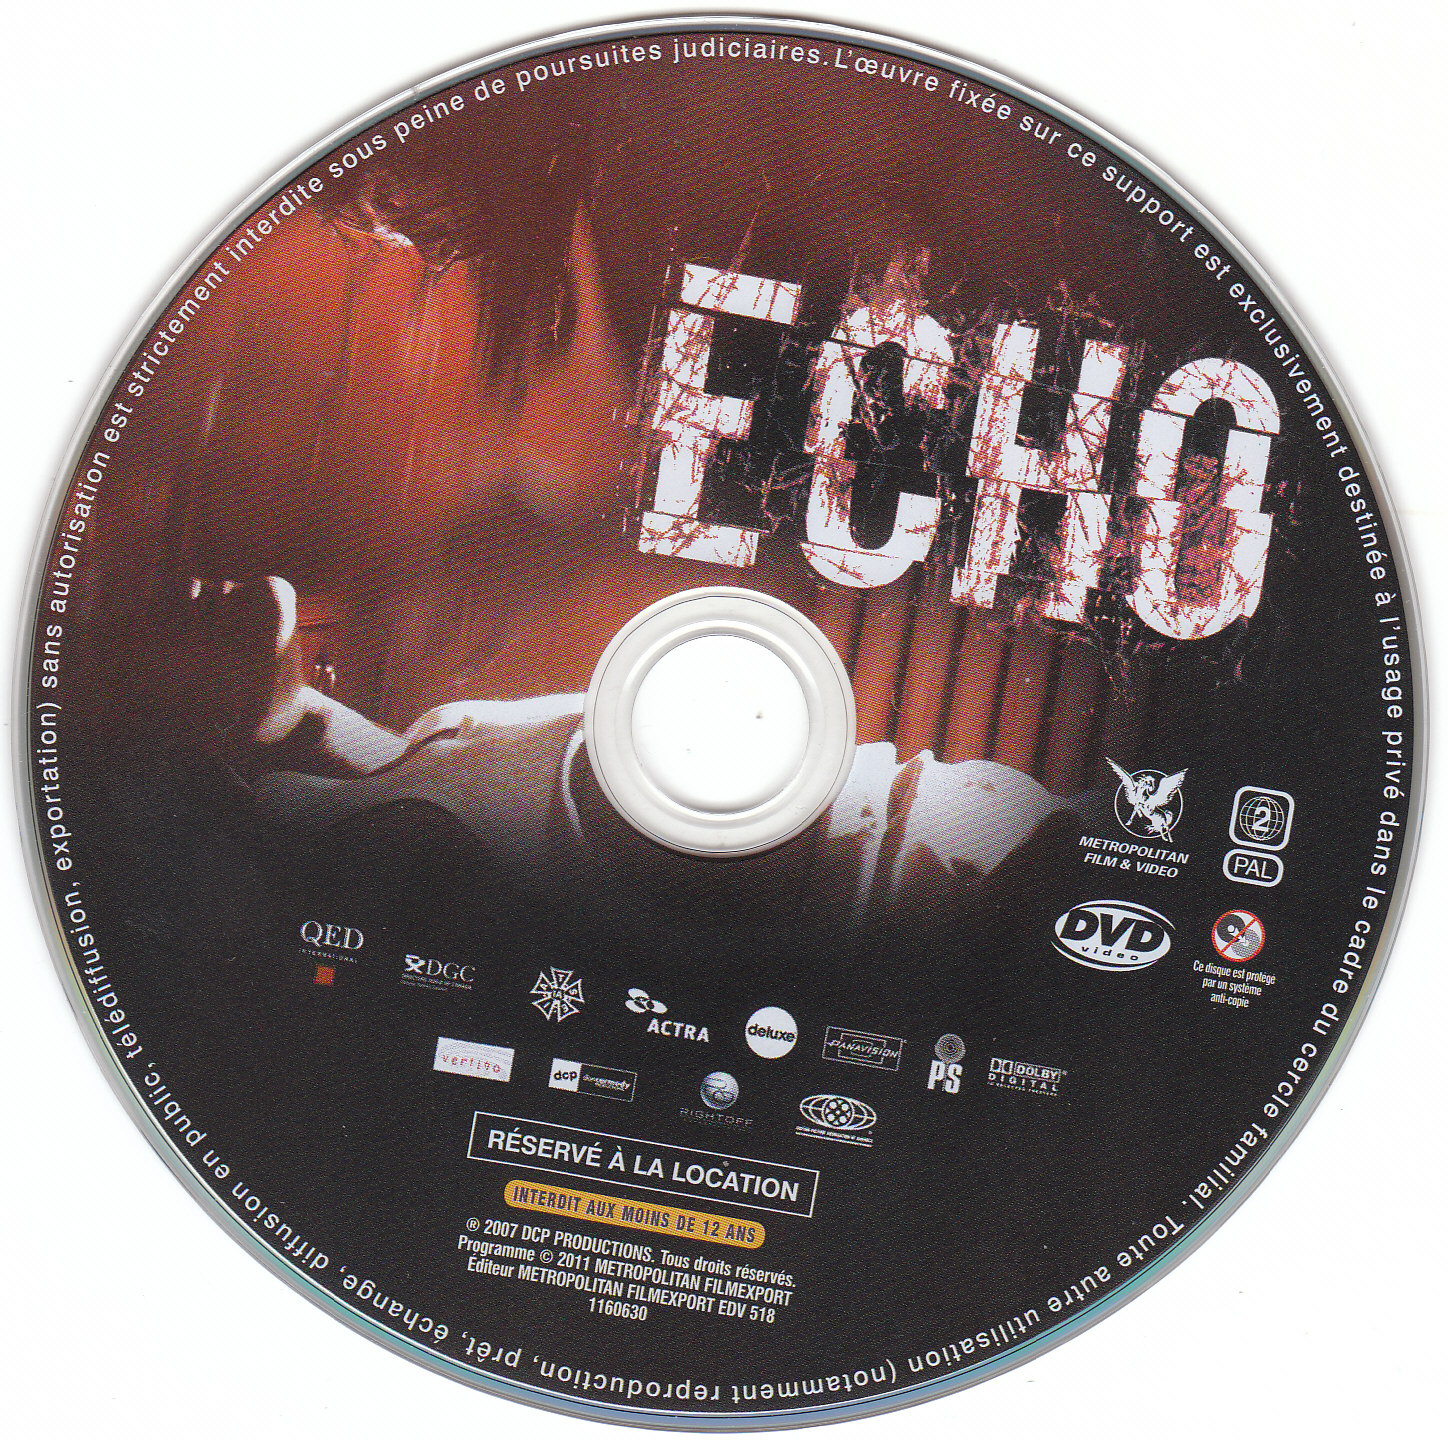 Echo (2008)